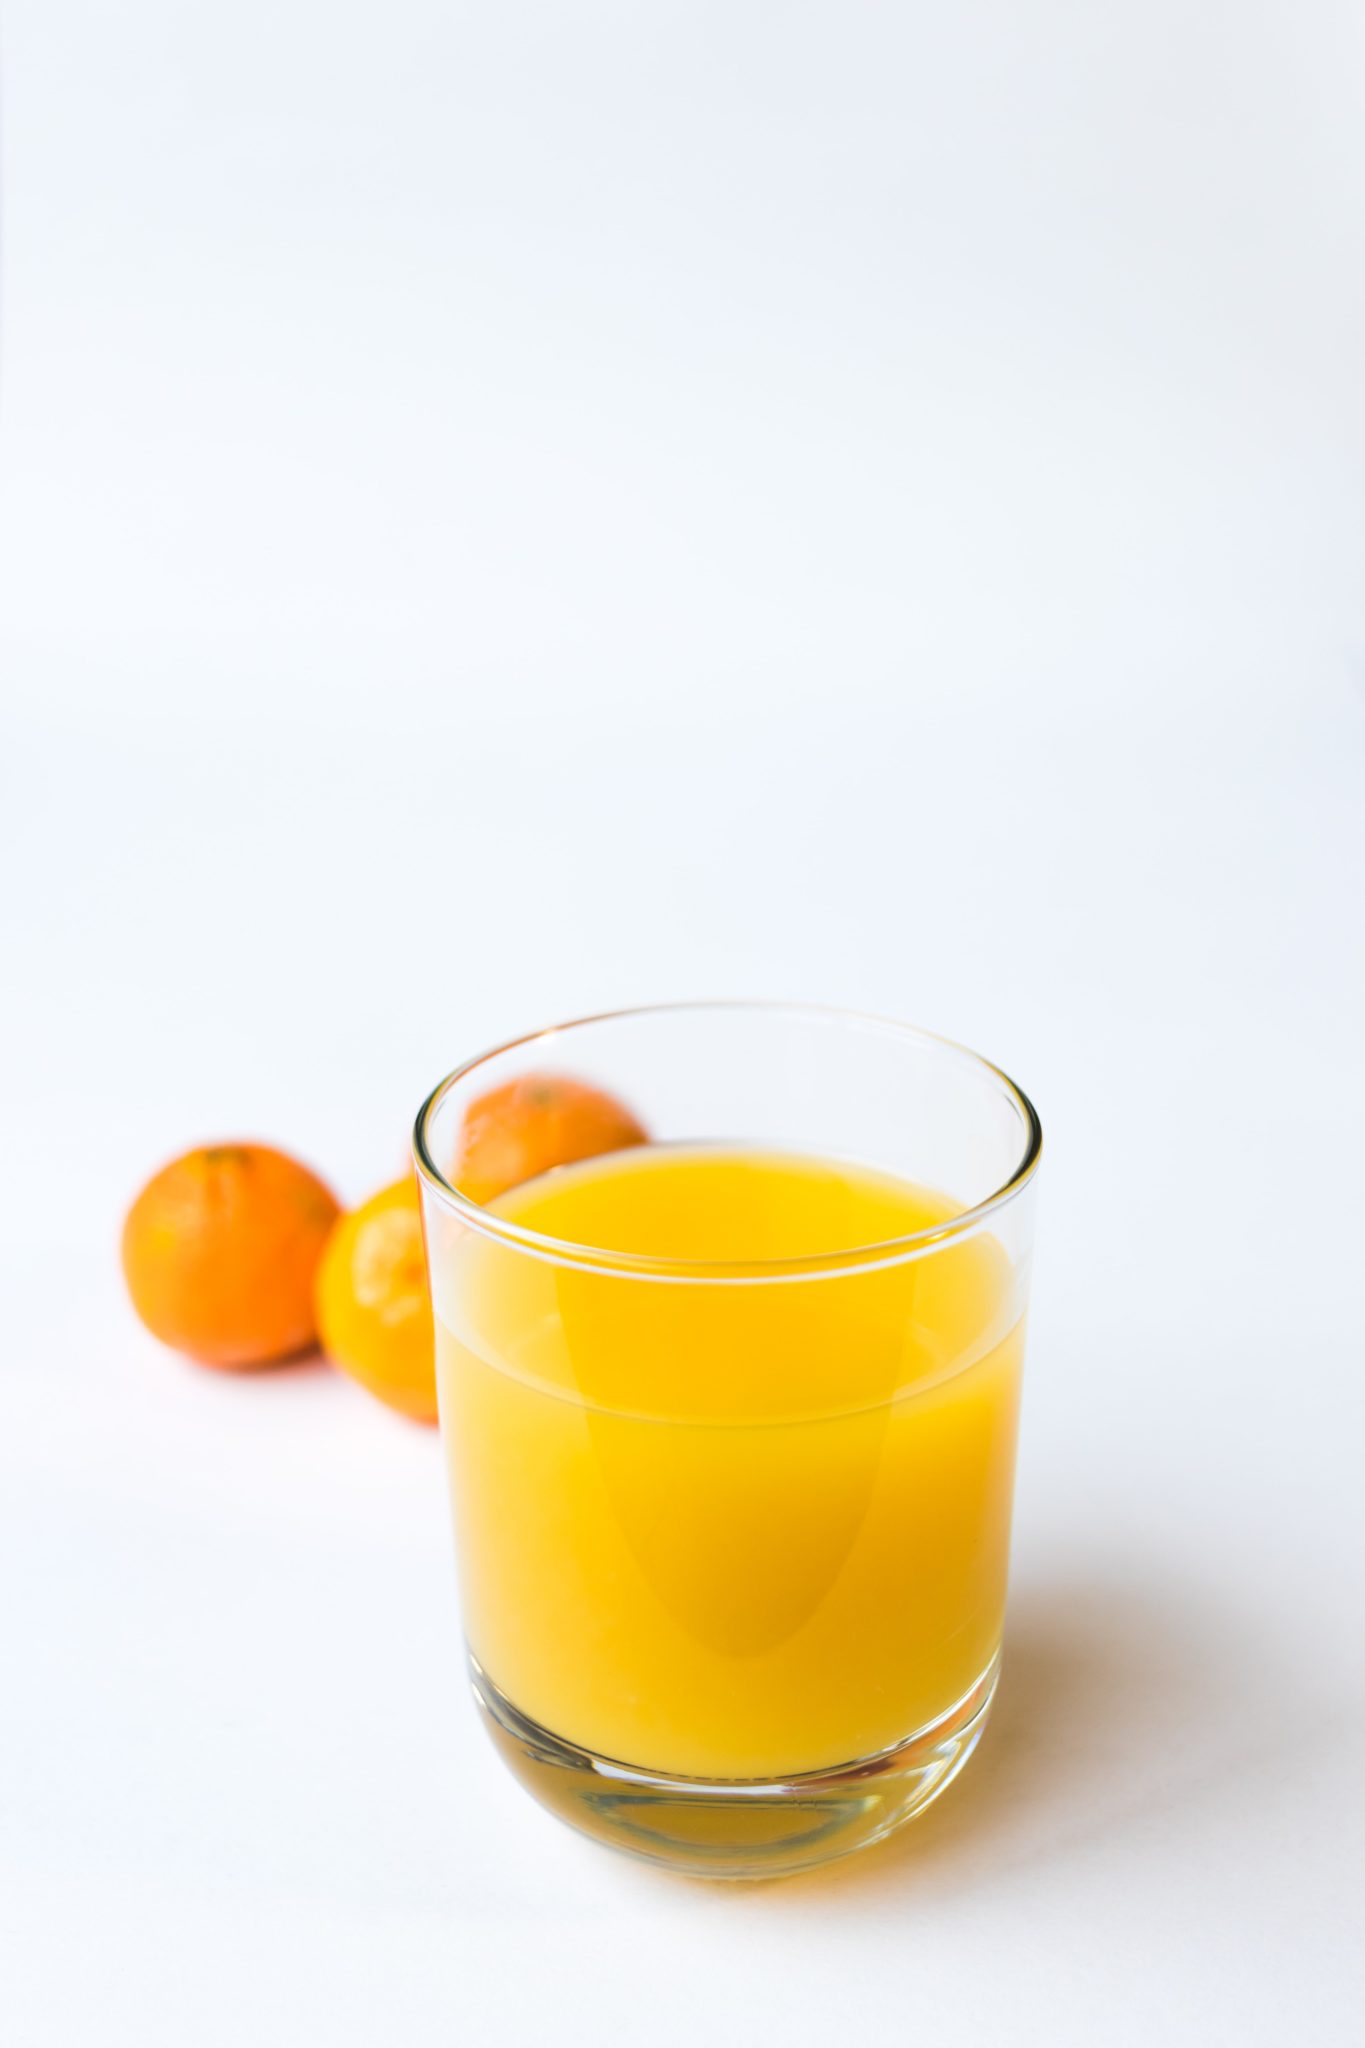 photo of orange juice in glass